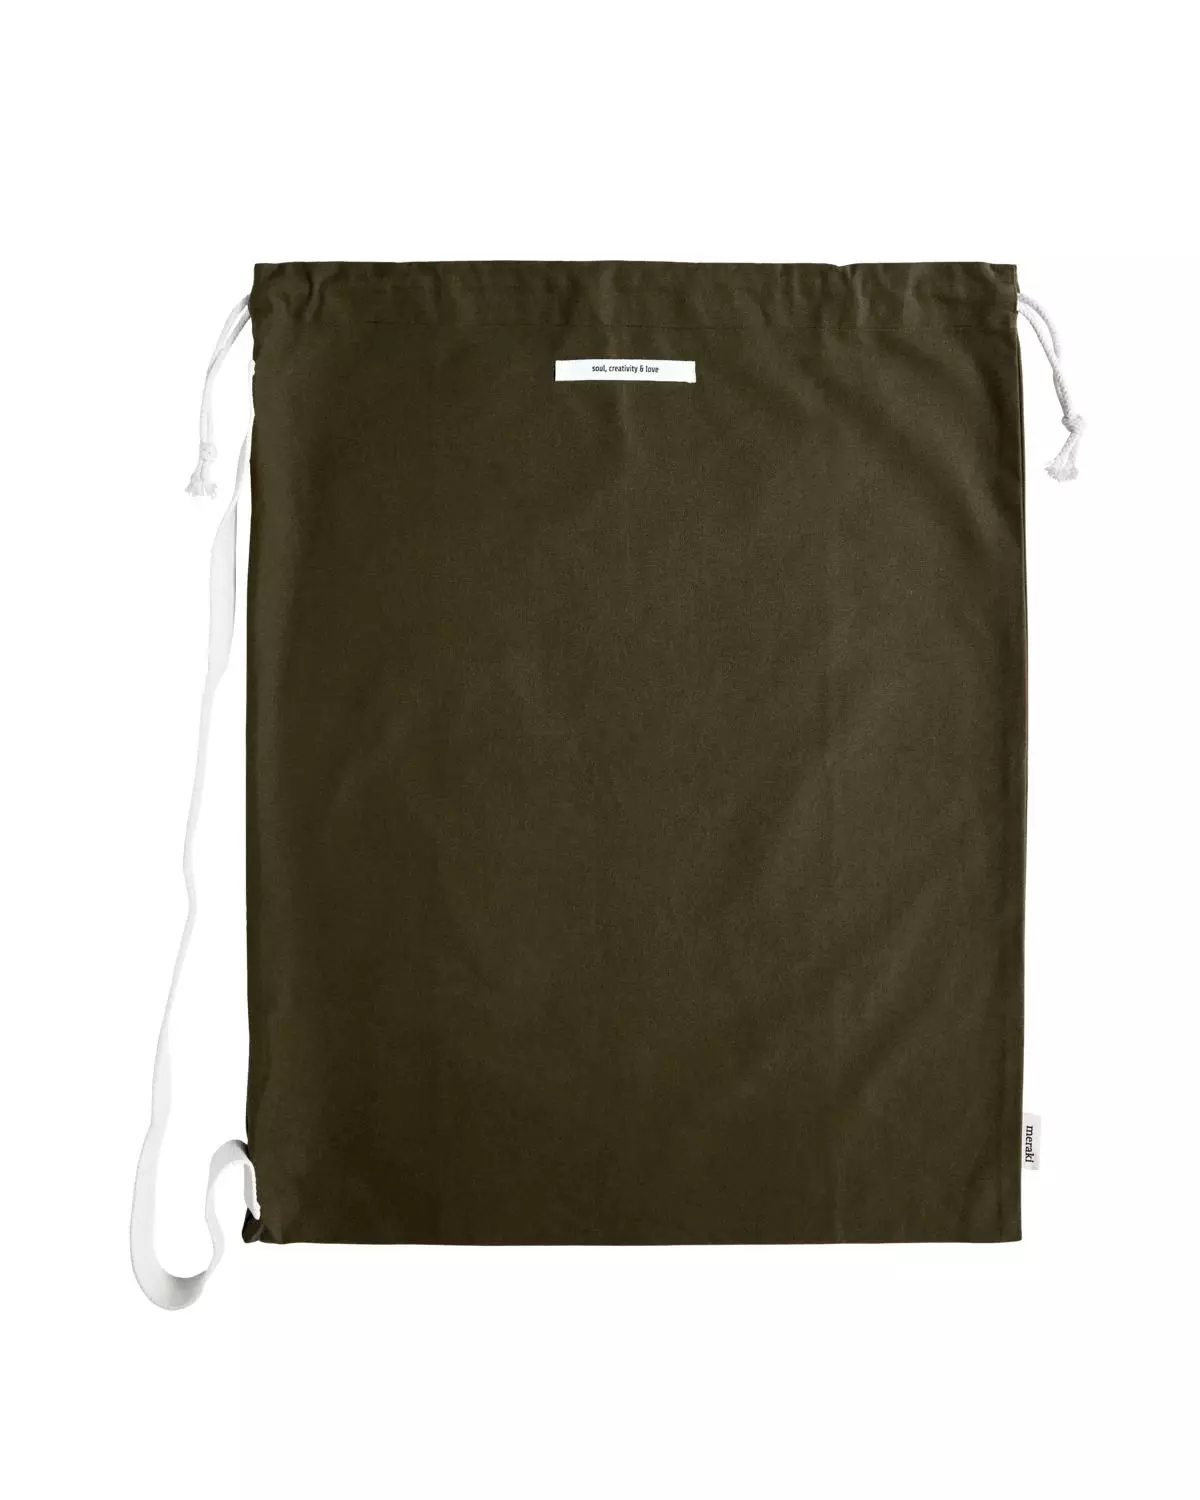 Meraki Cataria Cotton Bag Army Green